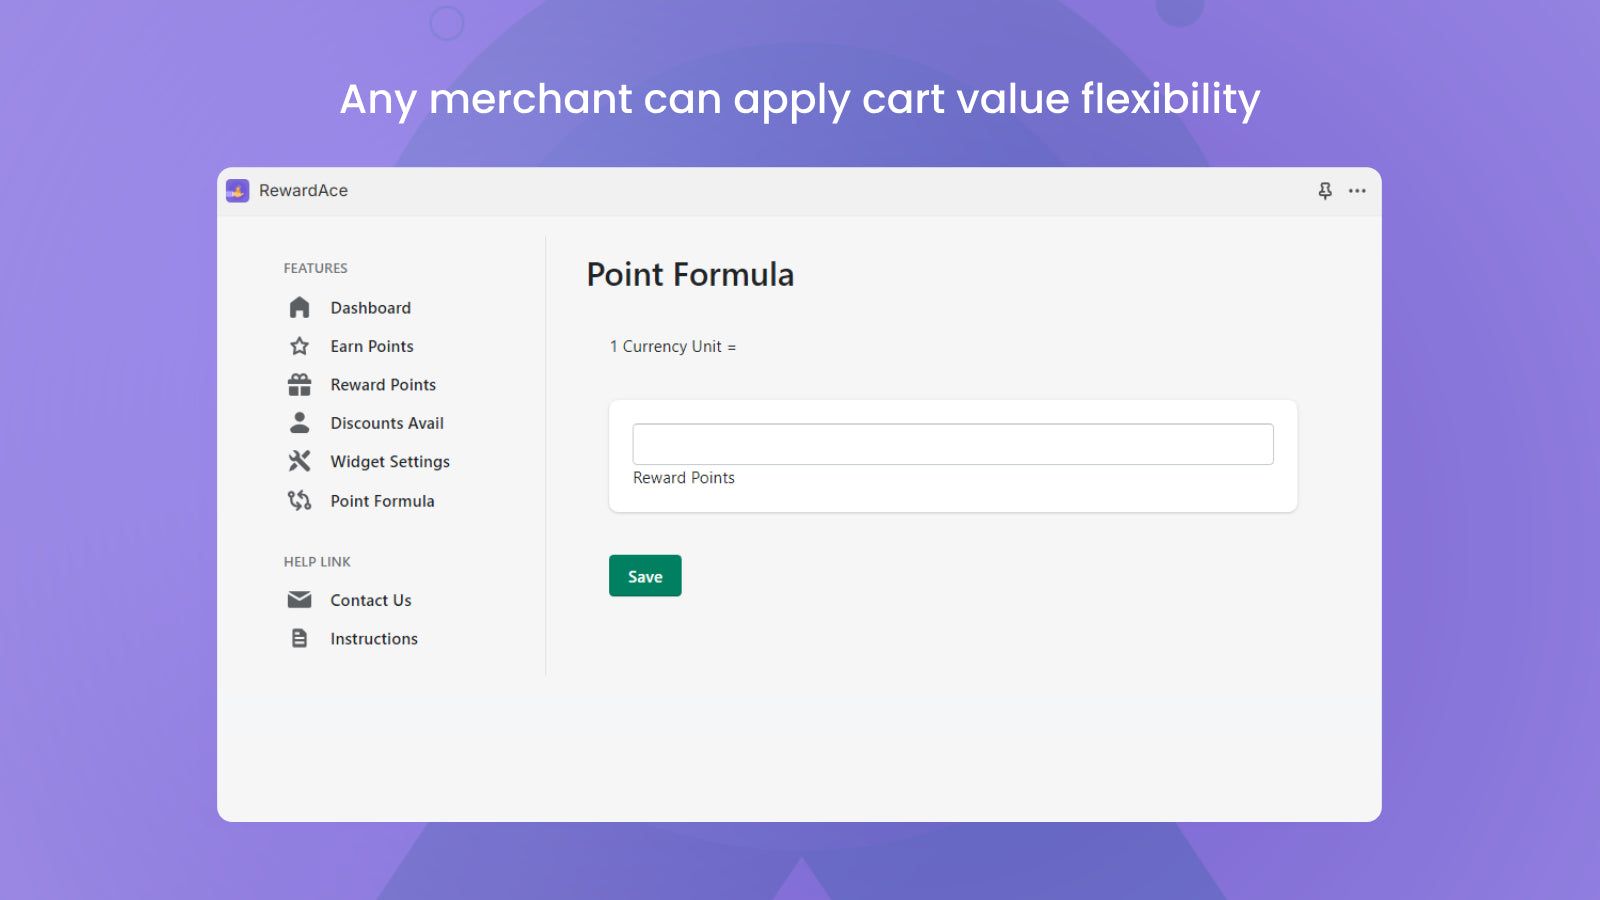 Any Merchant can apply card value flexibility